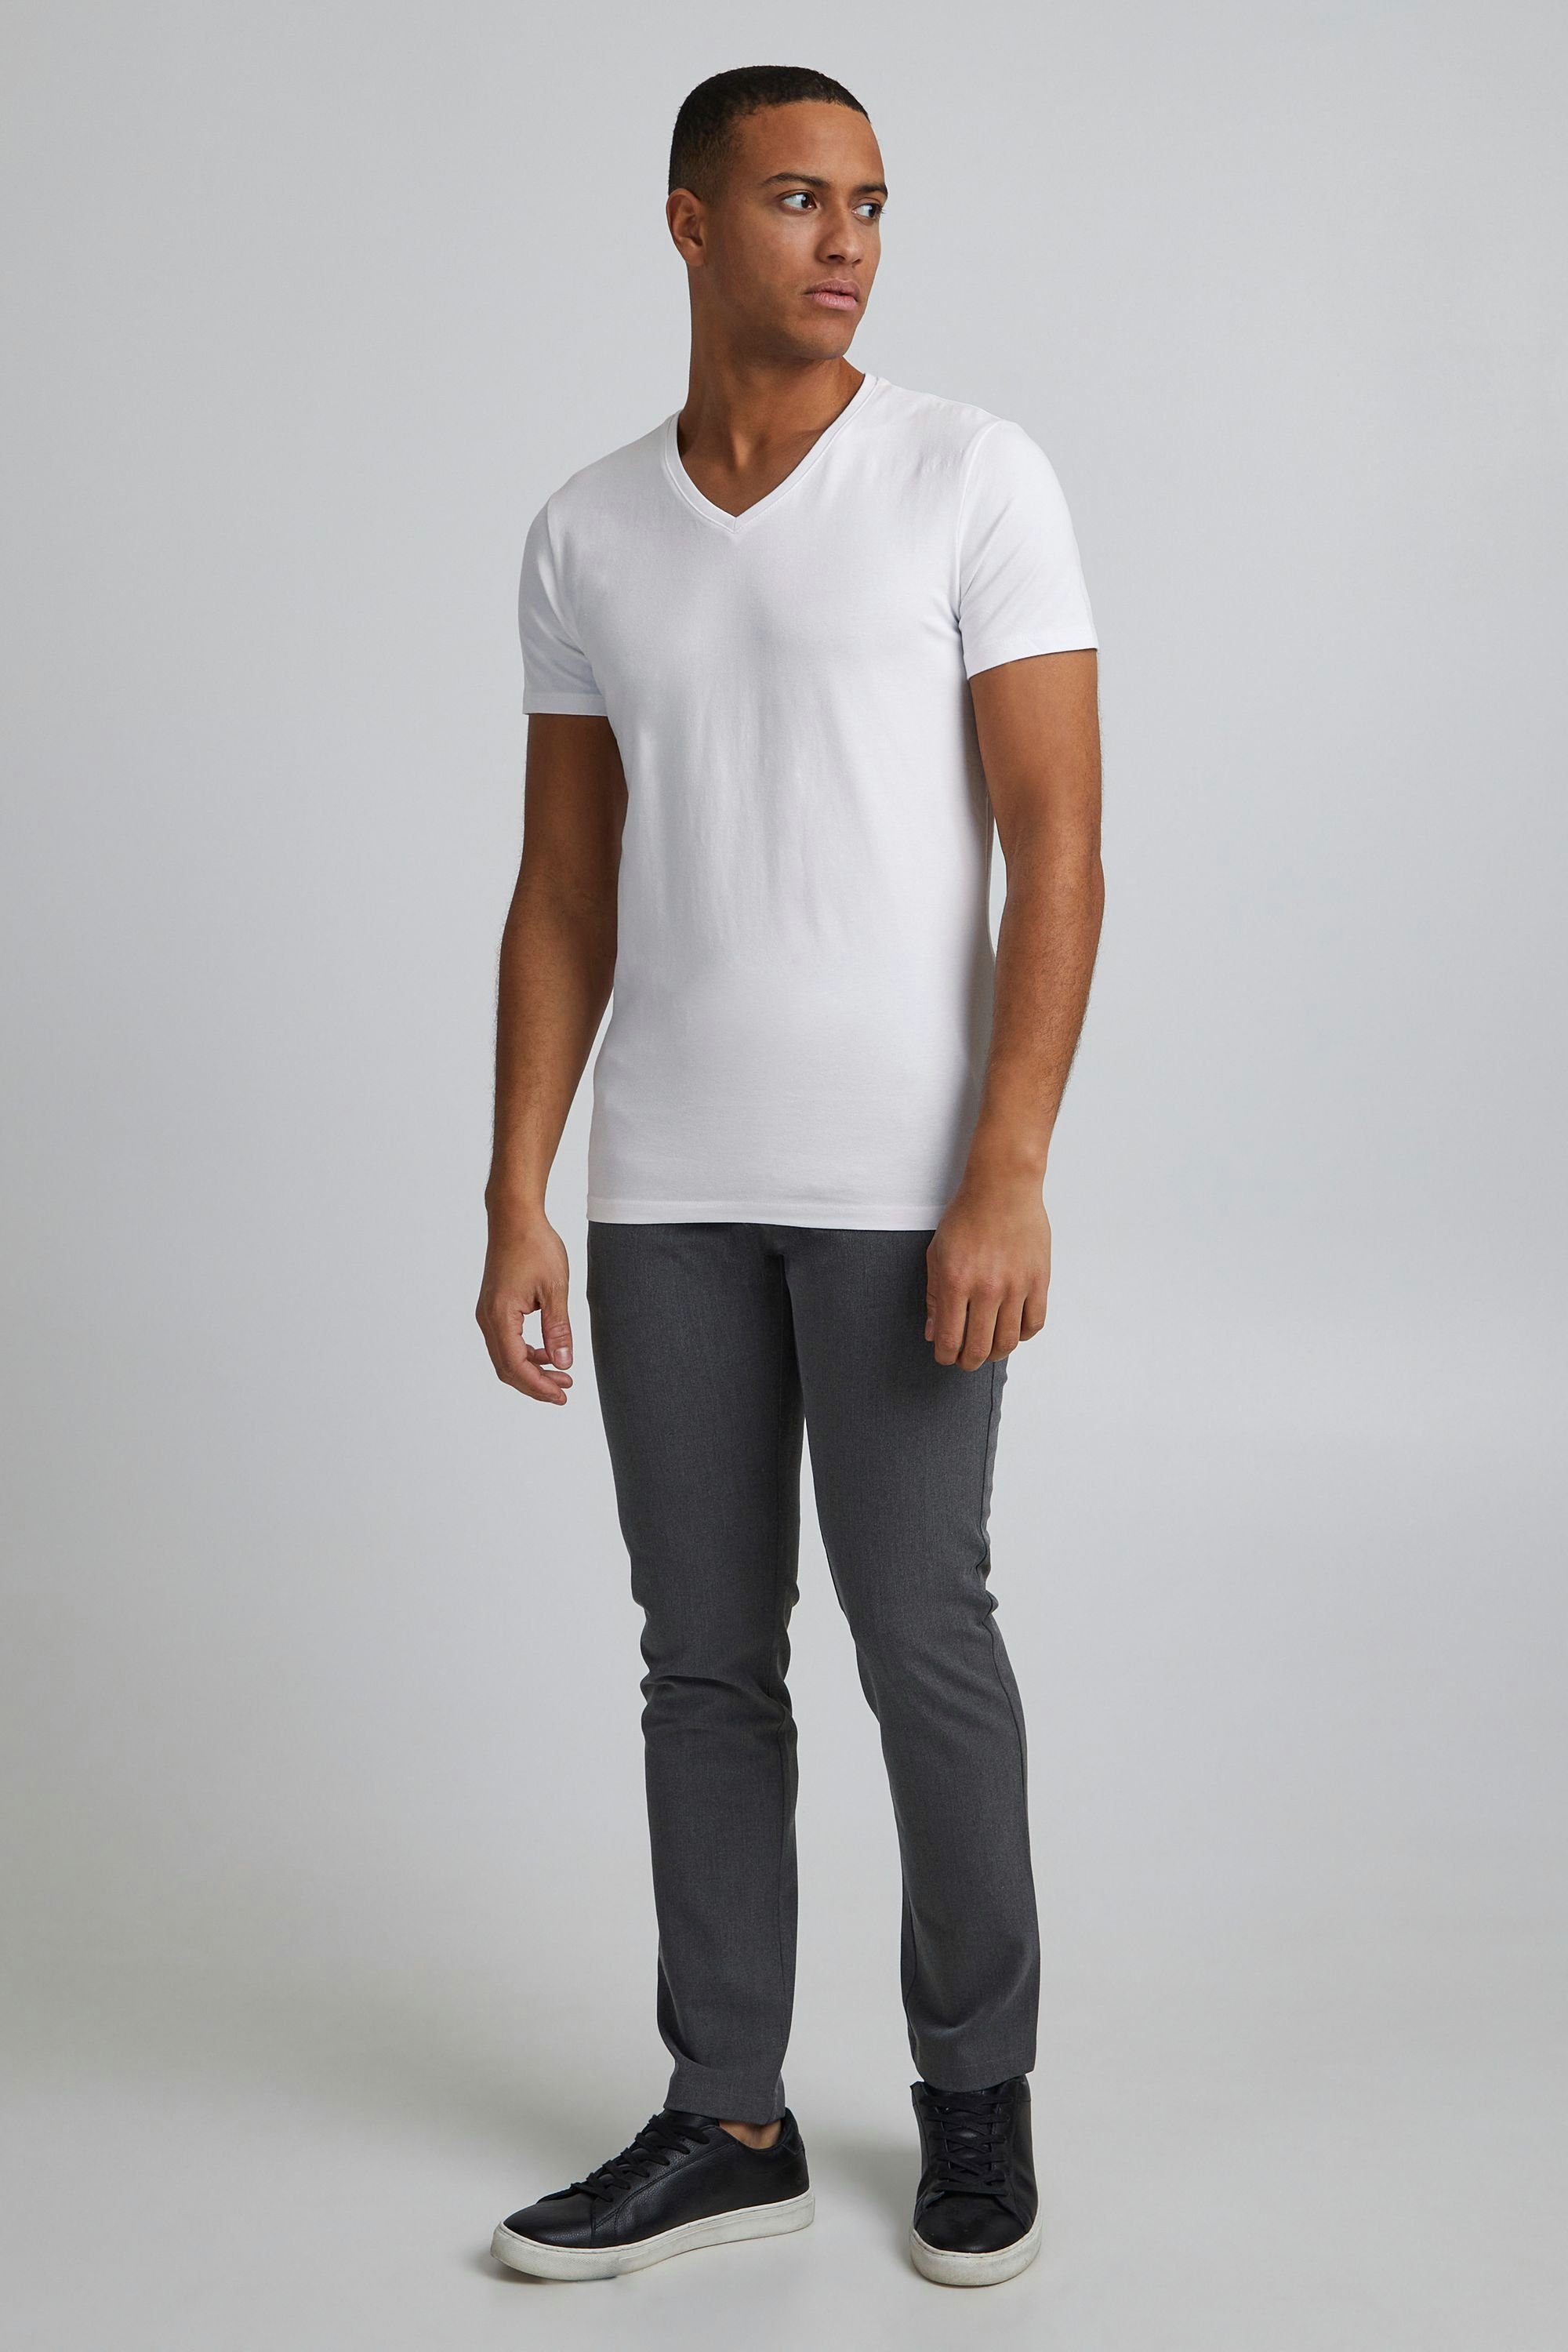 CFLincoln Friday 20503062 Casual white mit T-Shirt V-Ausschnitt Bright - (50104) T-Shirt